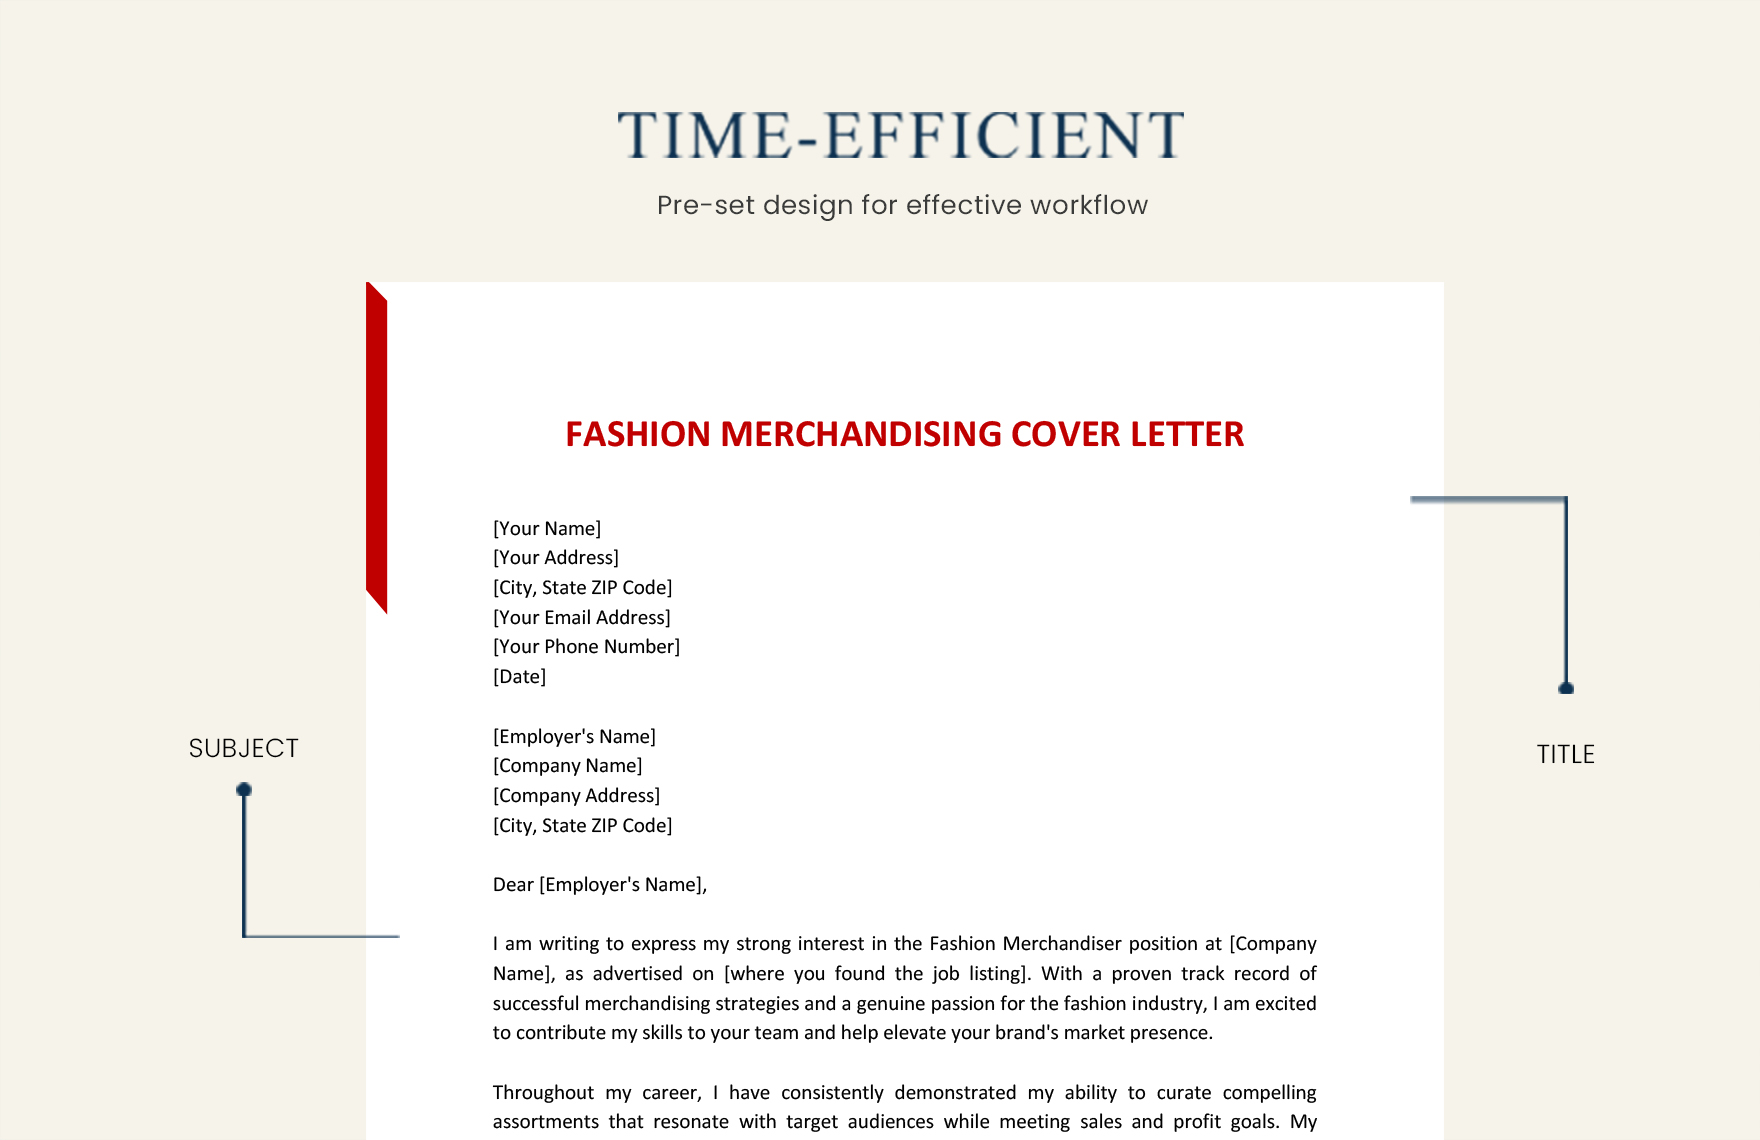 Fashion Merchandising Cover Letter